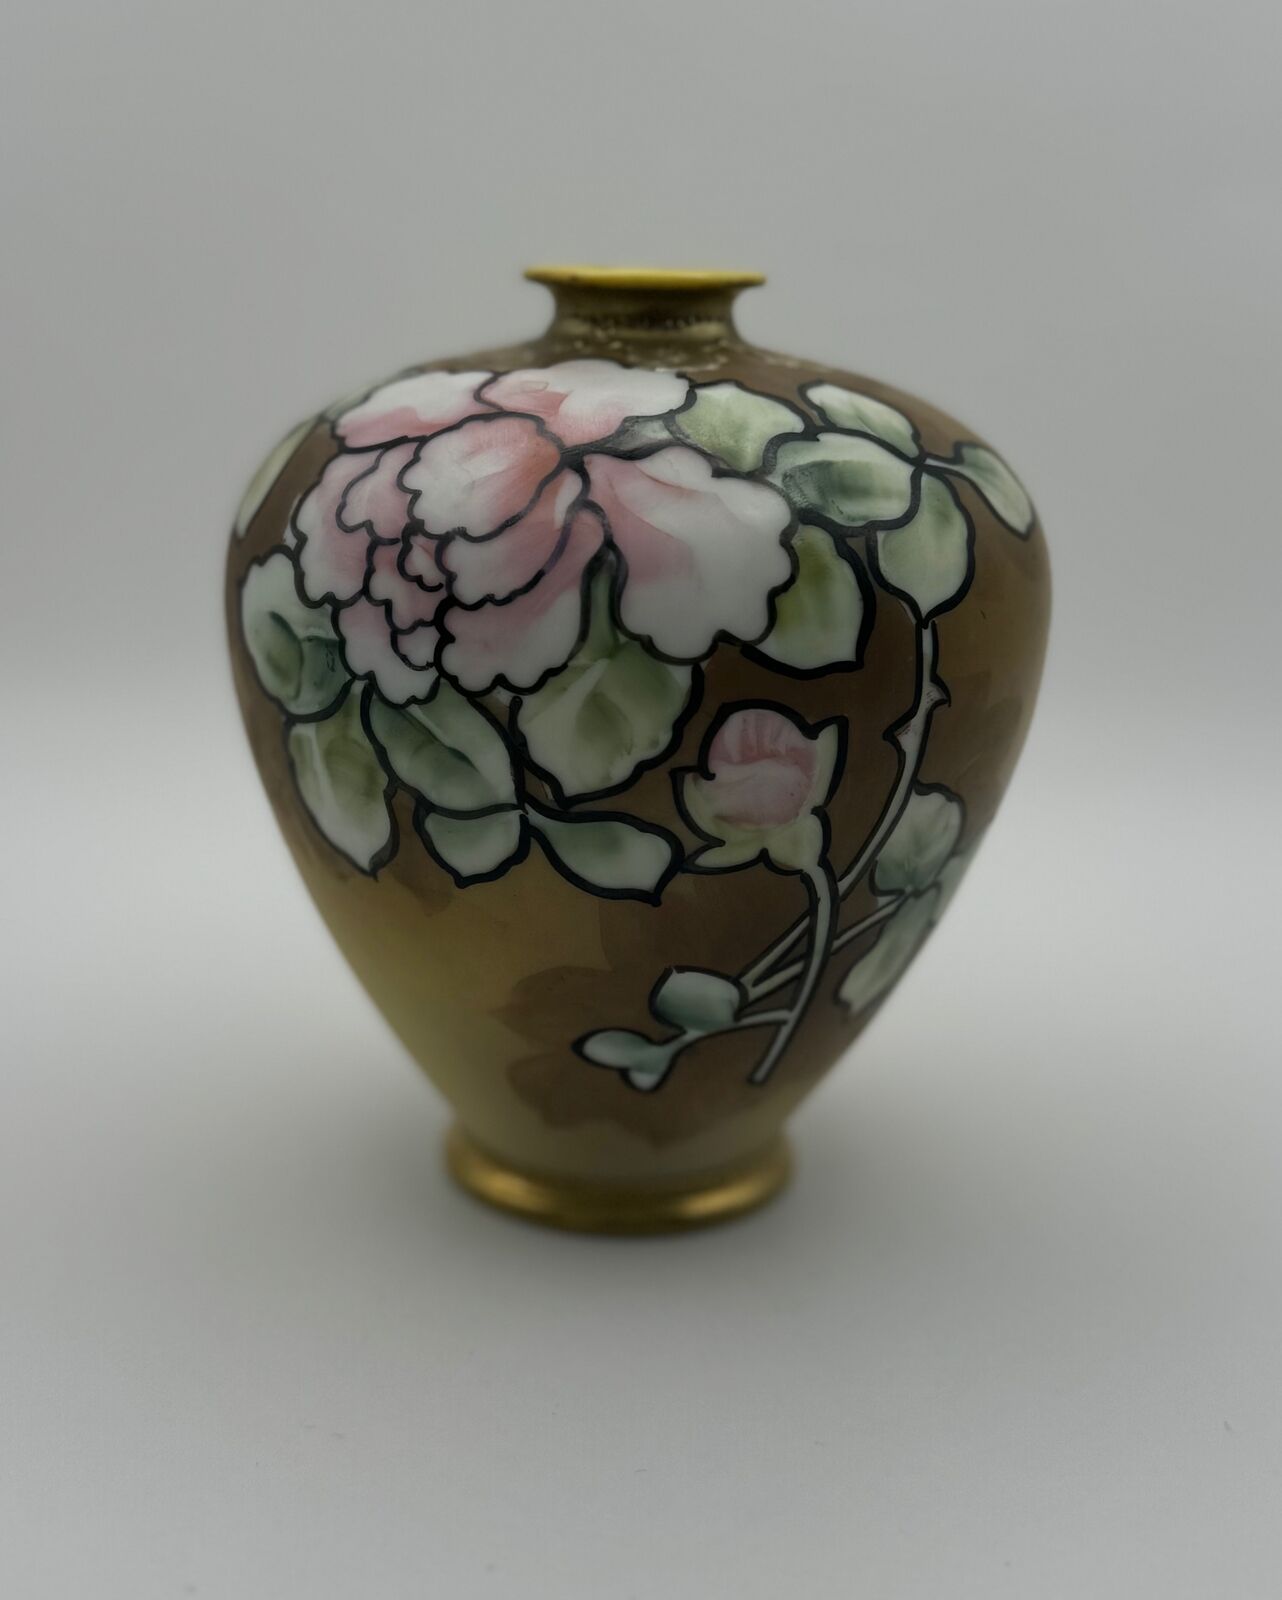 Antique Hand-Painted Nippon Porcelain Vase, Floral Design, Gold Ground, c. 1900s